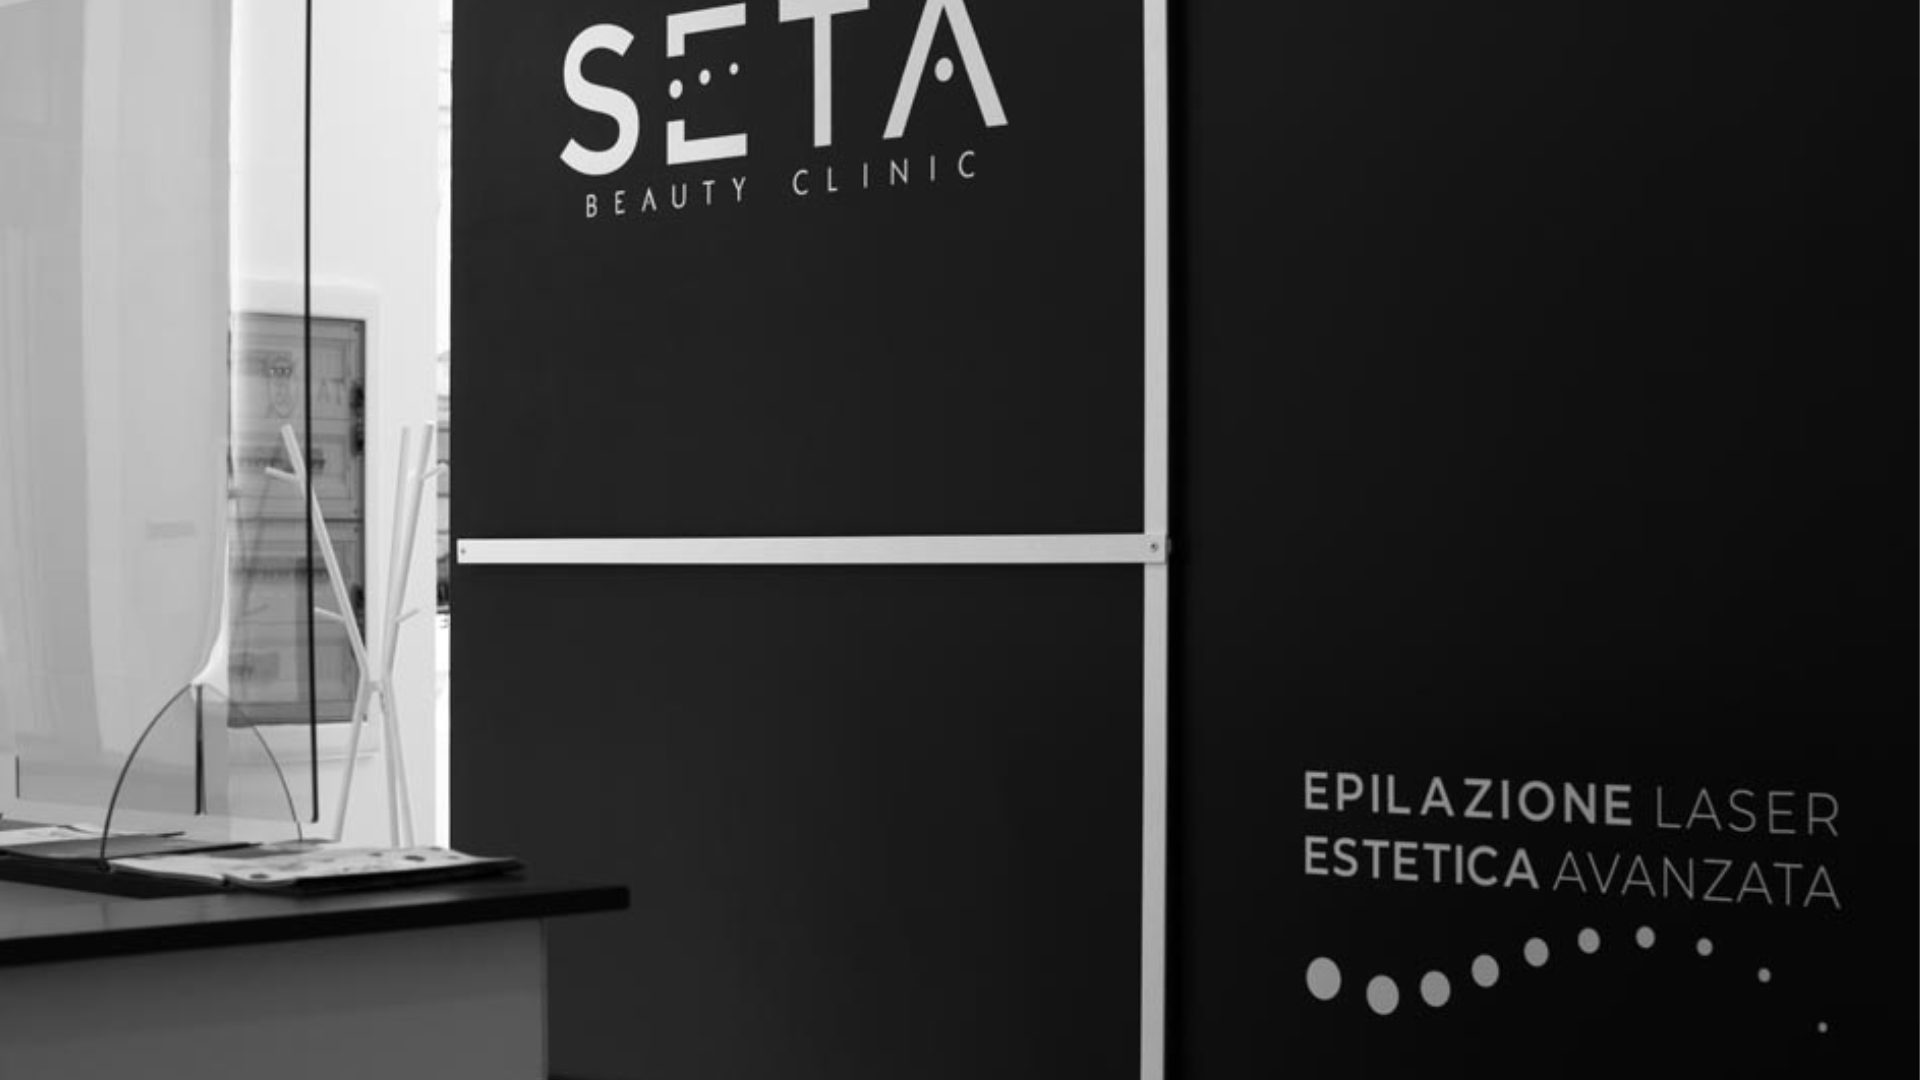 Seta Beauty Clinic Franchising